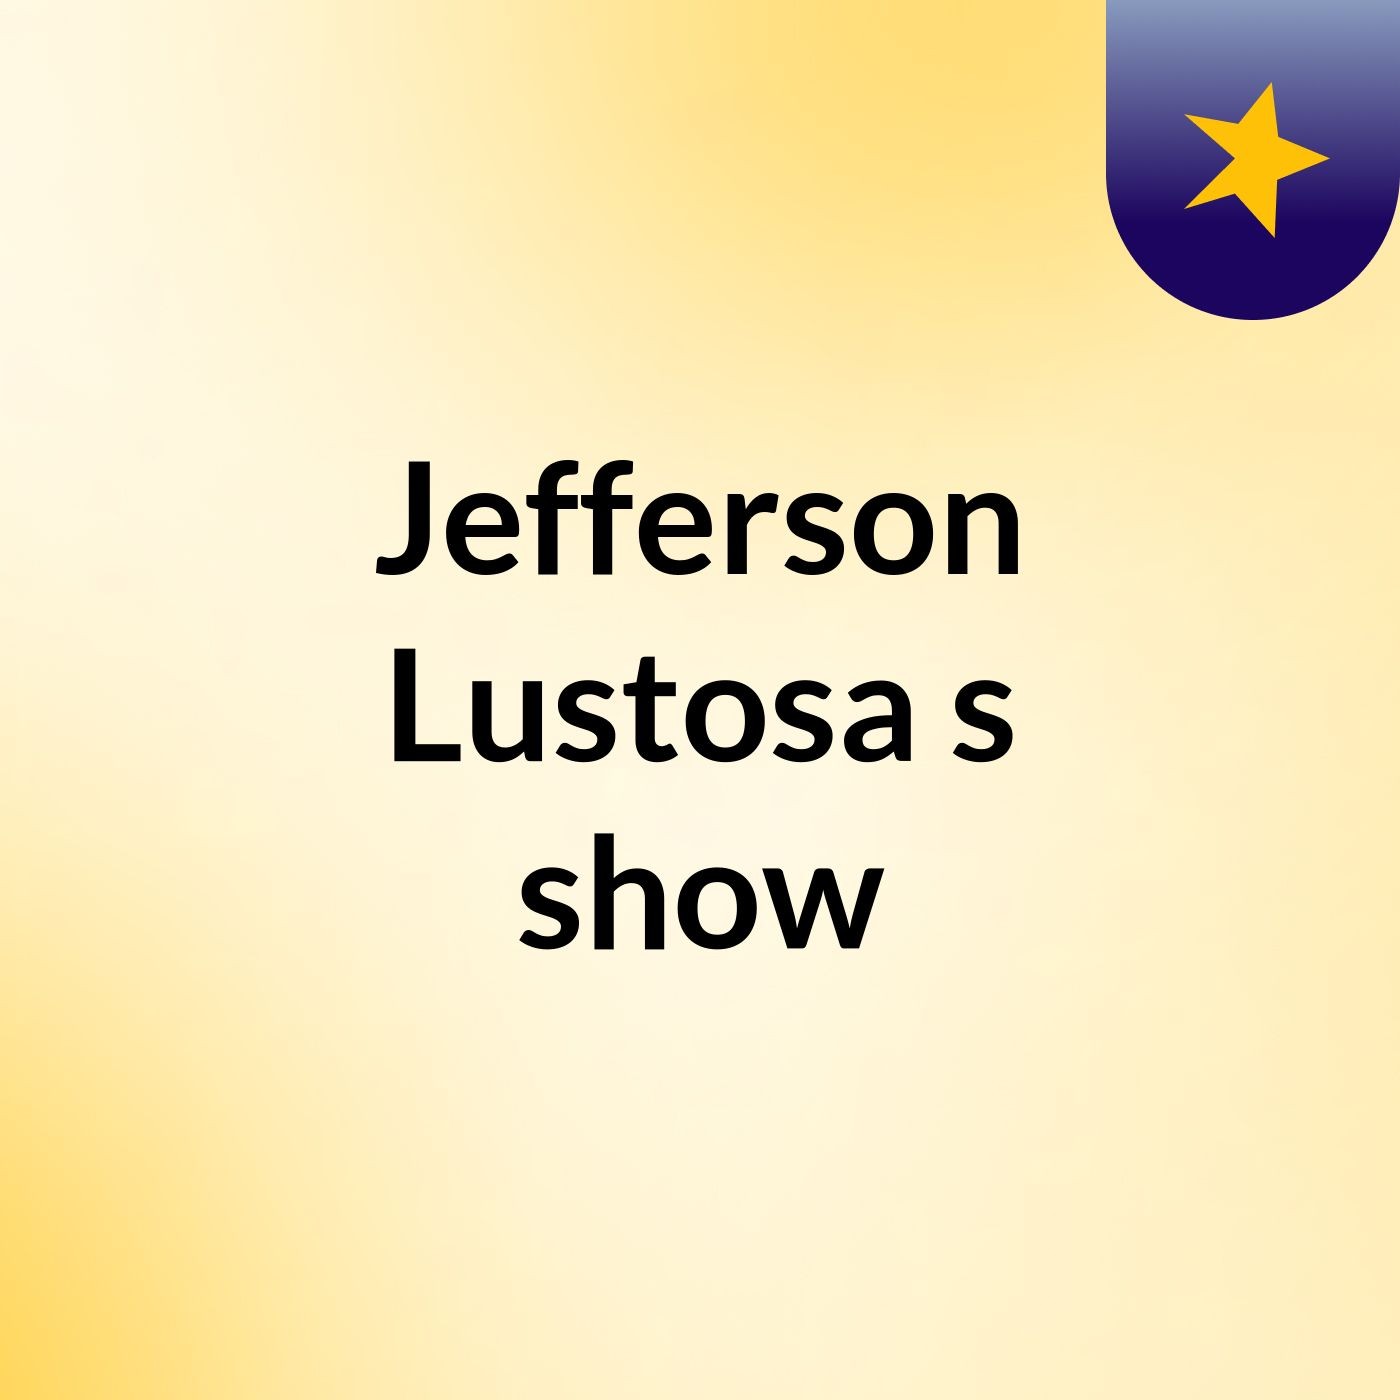 Jefferson Lustosa's show